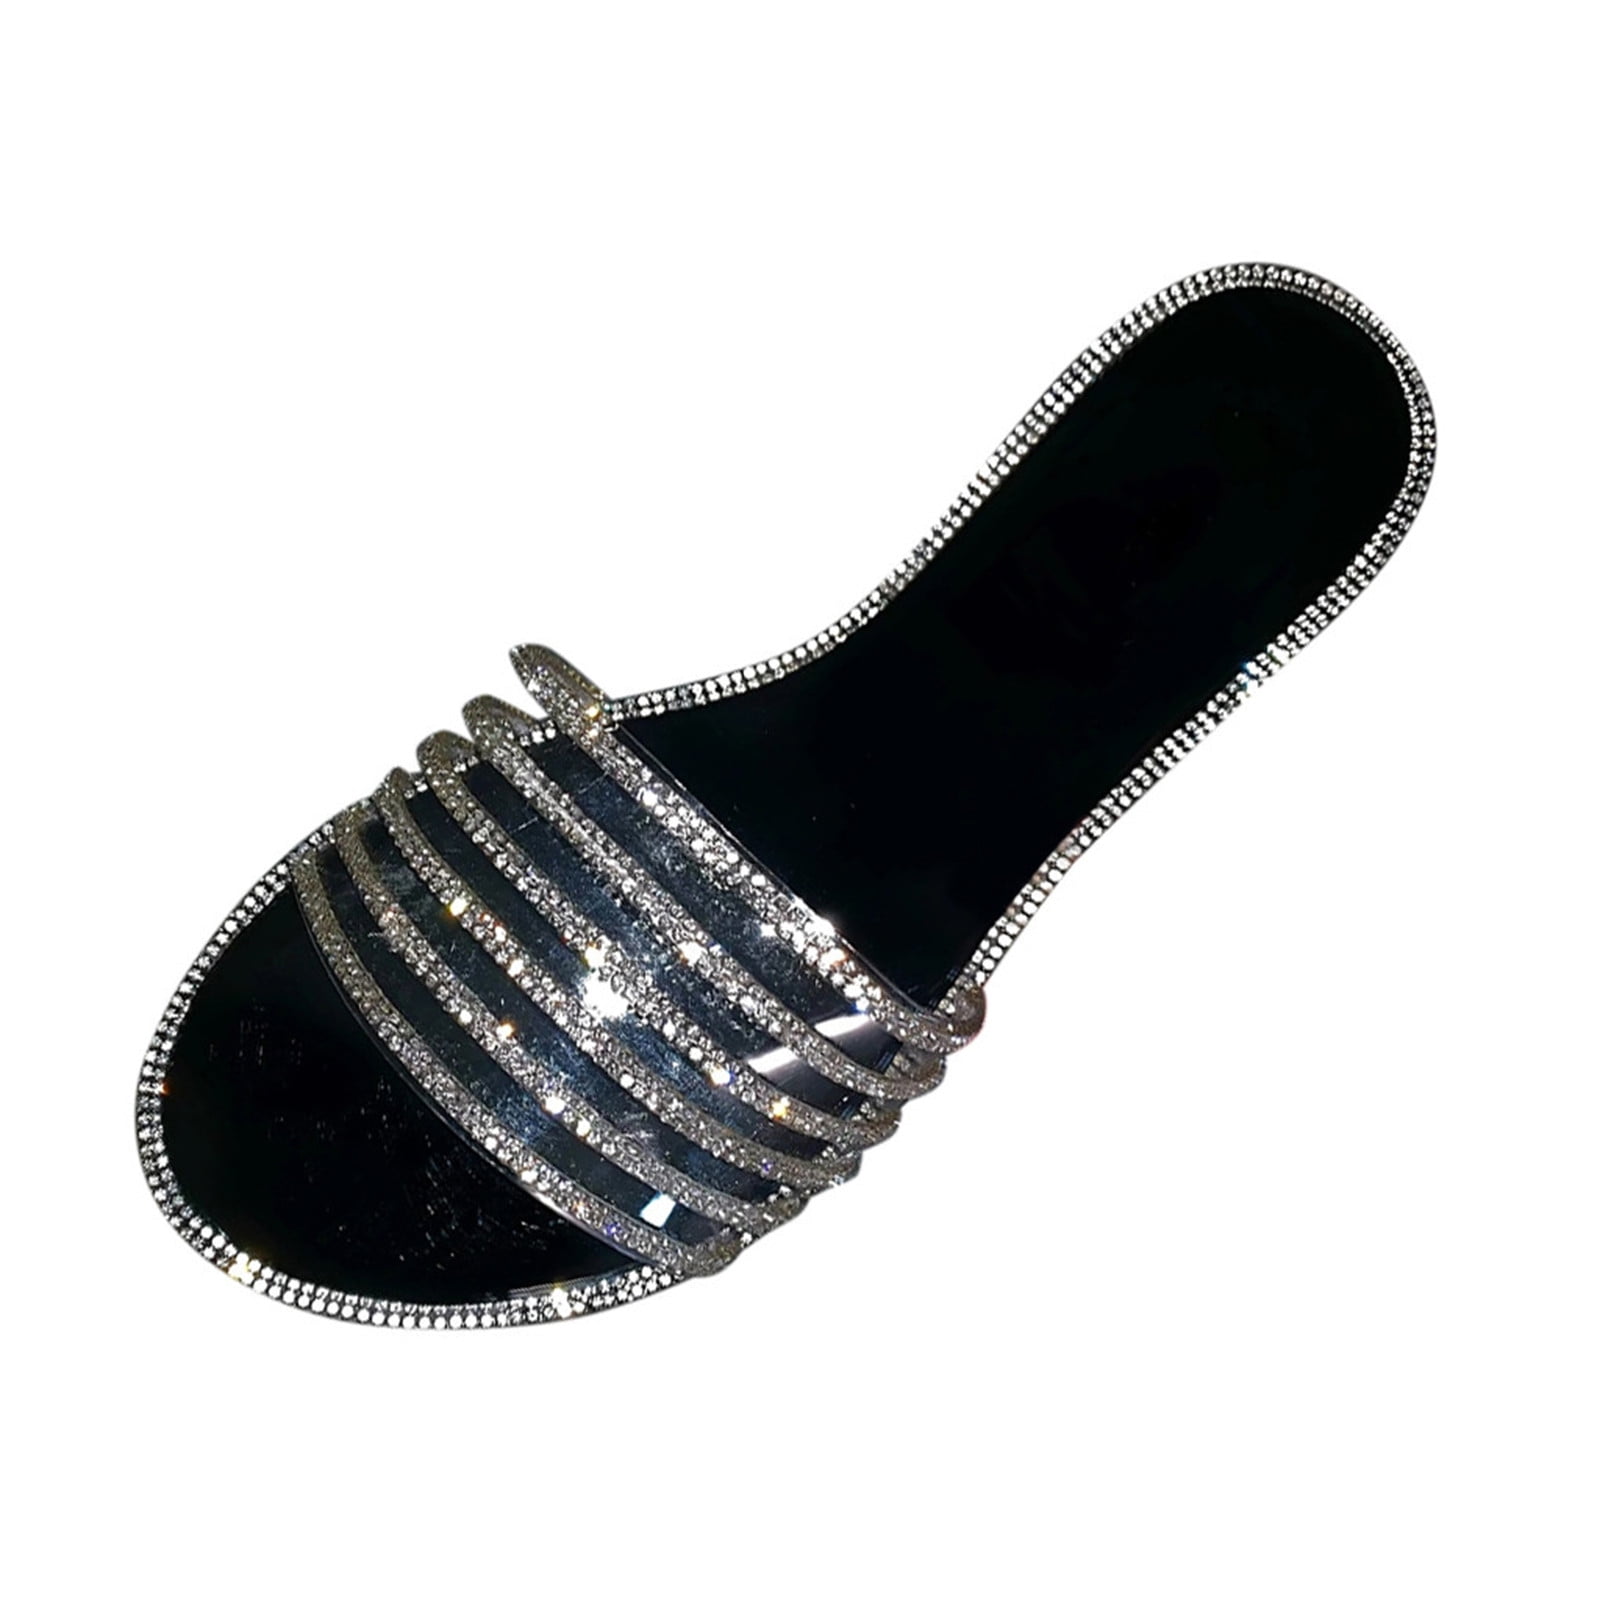 Walking Sandals for Women Comfortable Lightweight Non-Slip Easy to ...